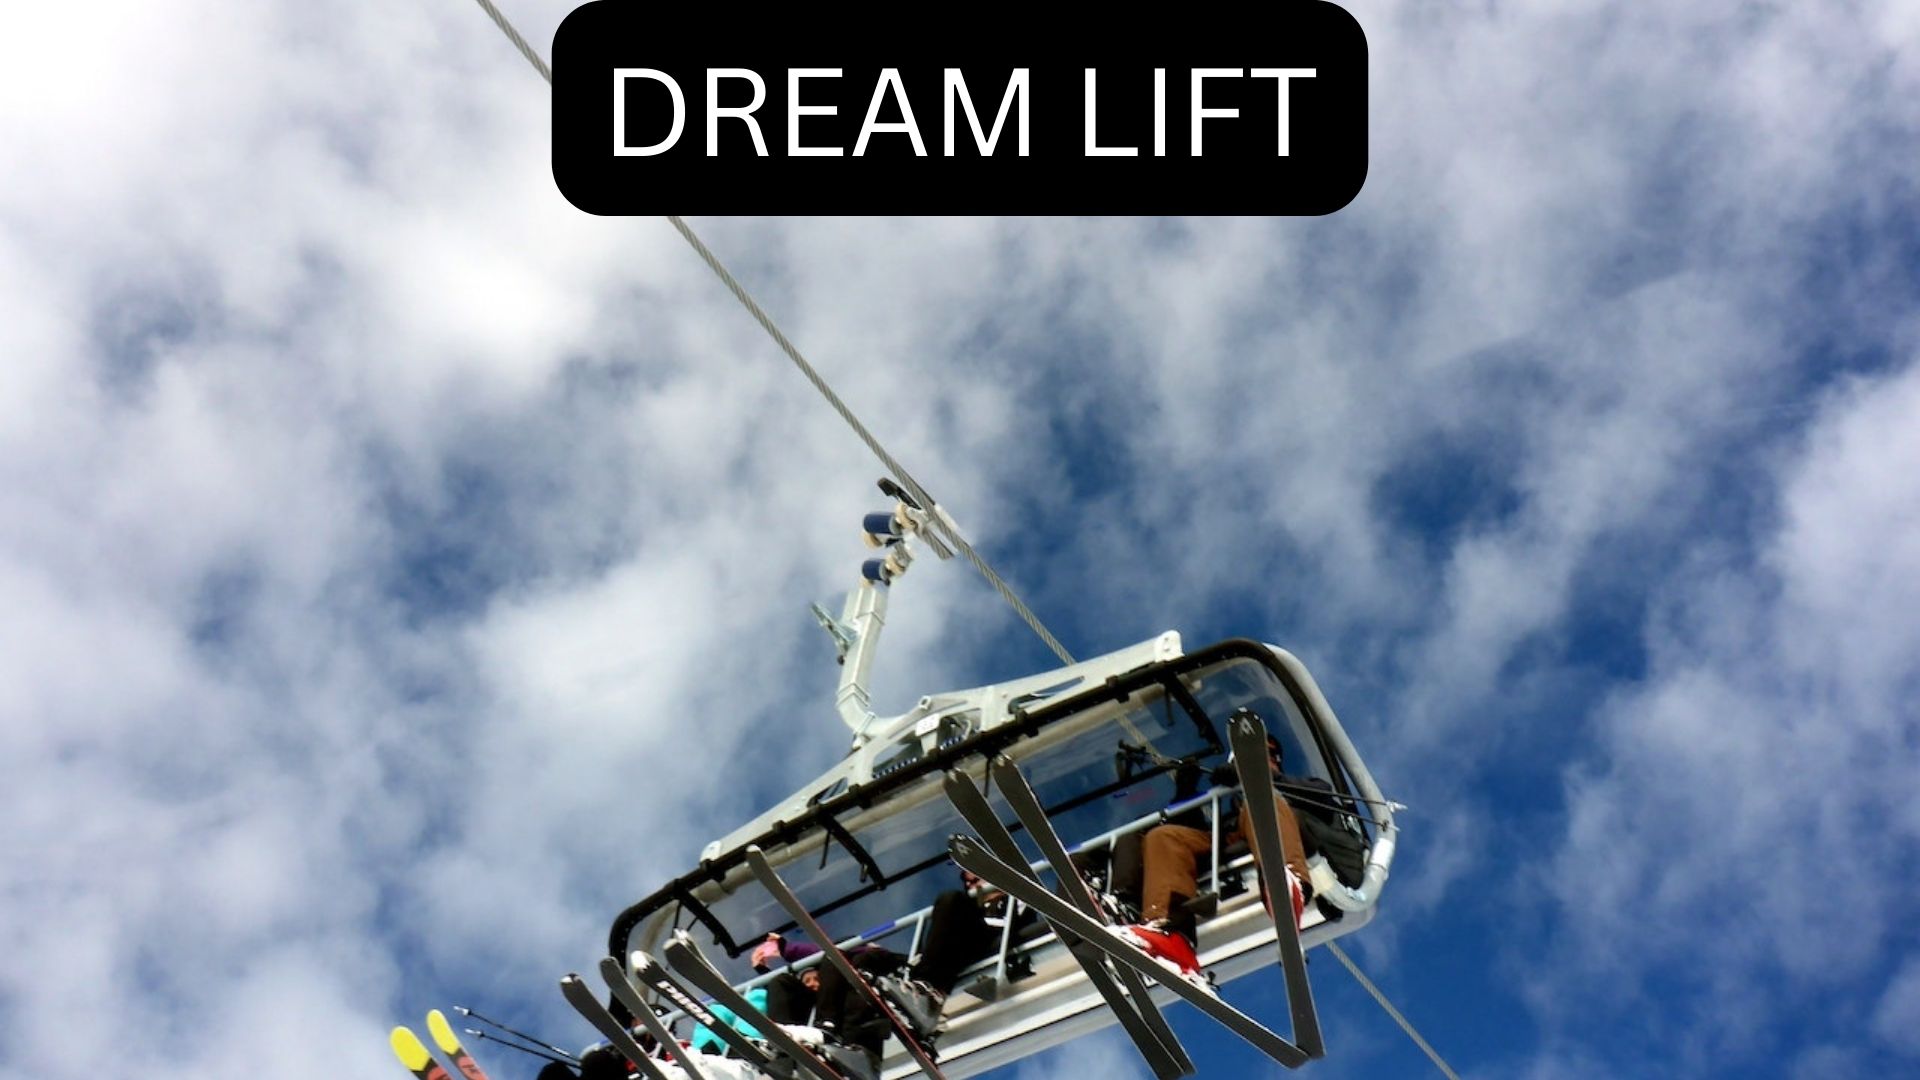 Dream Lift - Reflecting Your Achievements Or Advancements